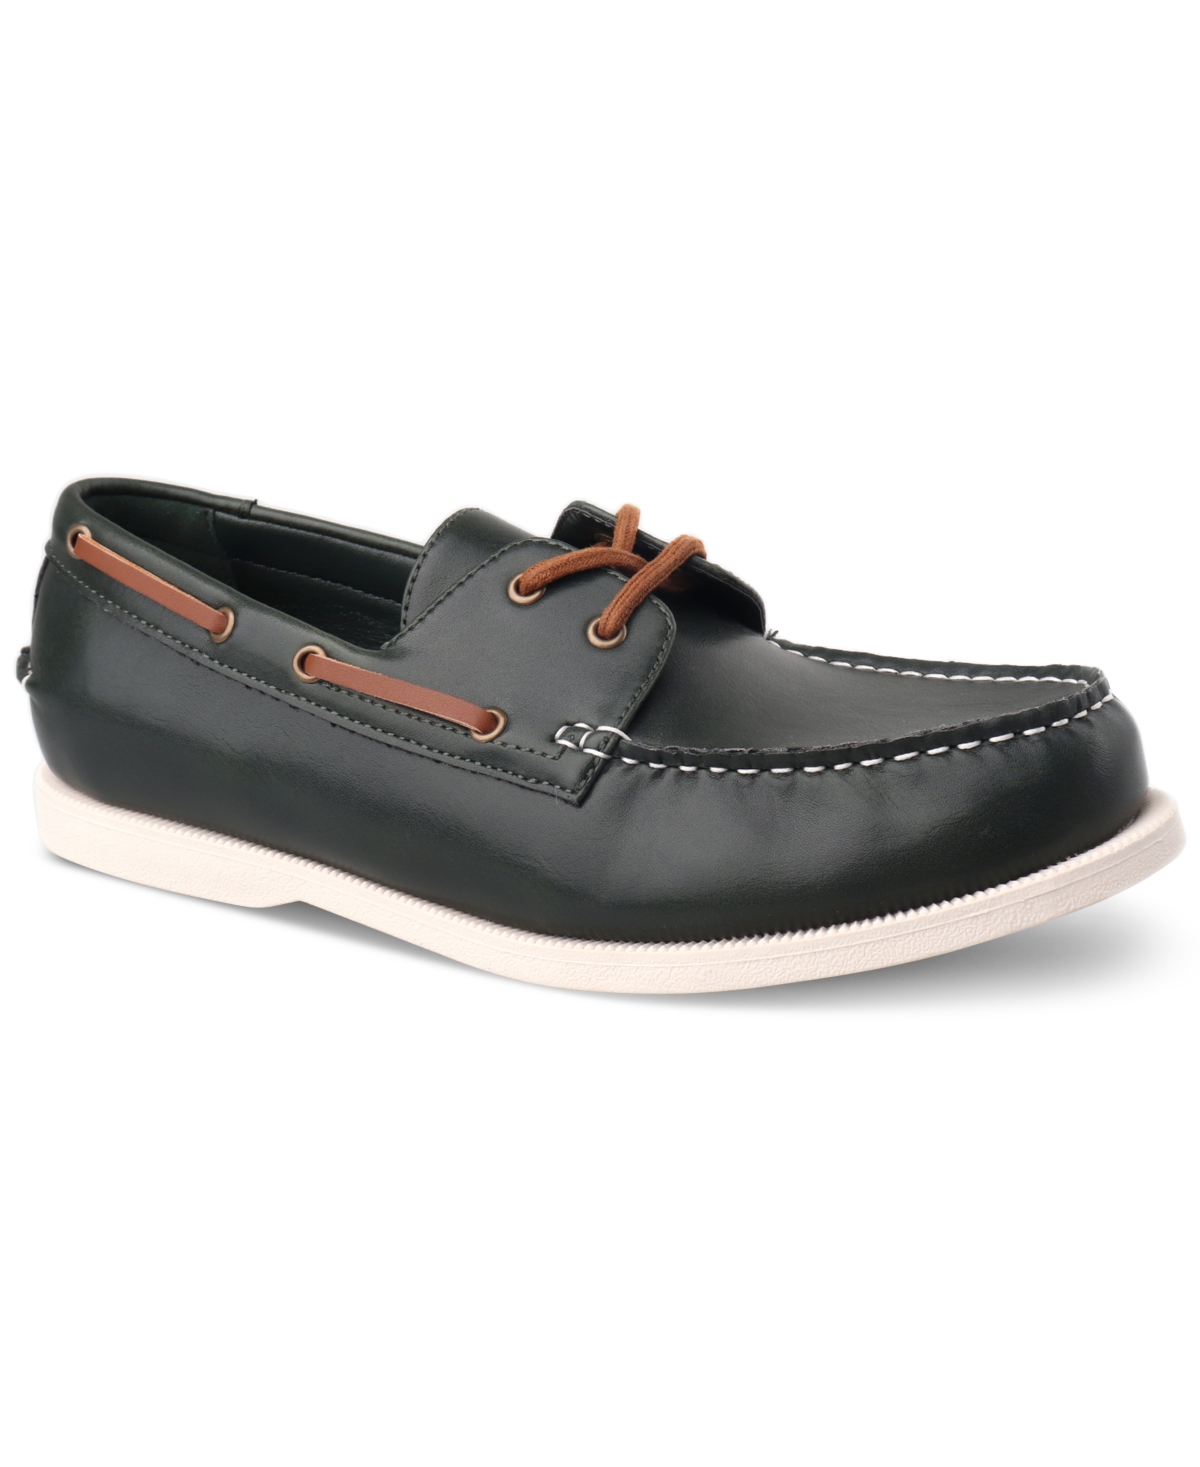 Men's Elliot Boat Shoes, Created for Macy's - Dark Green